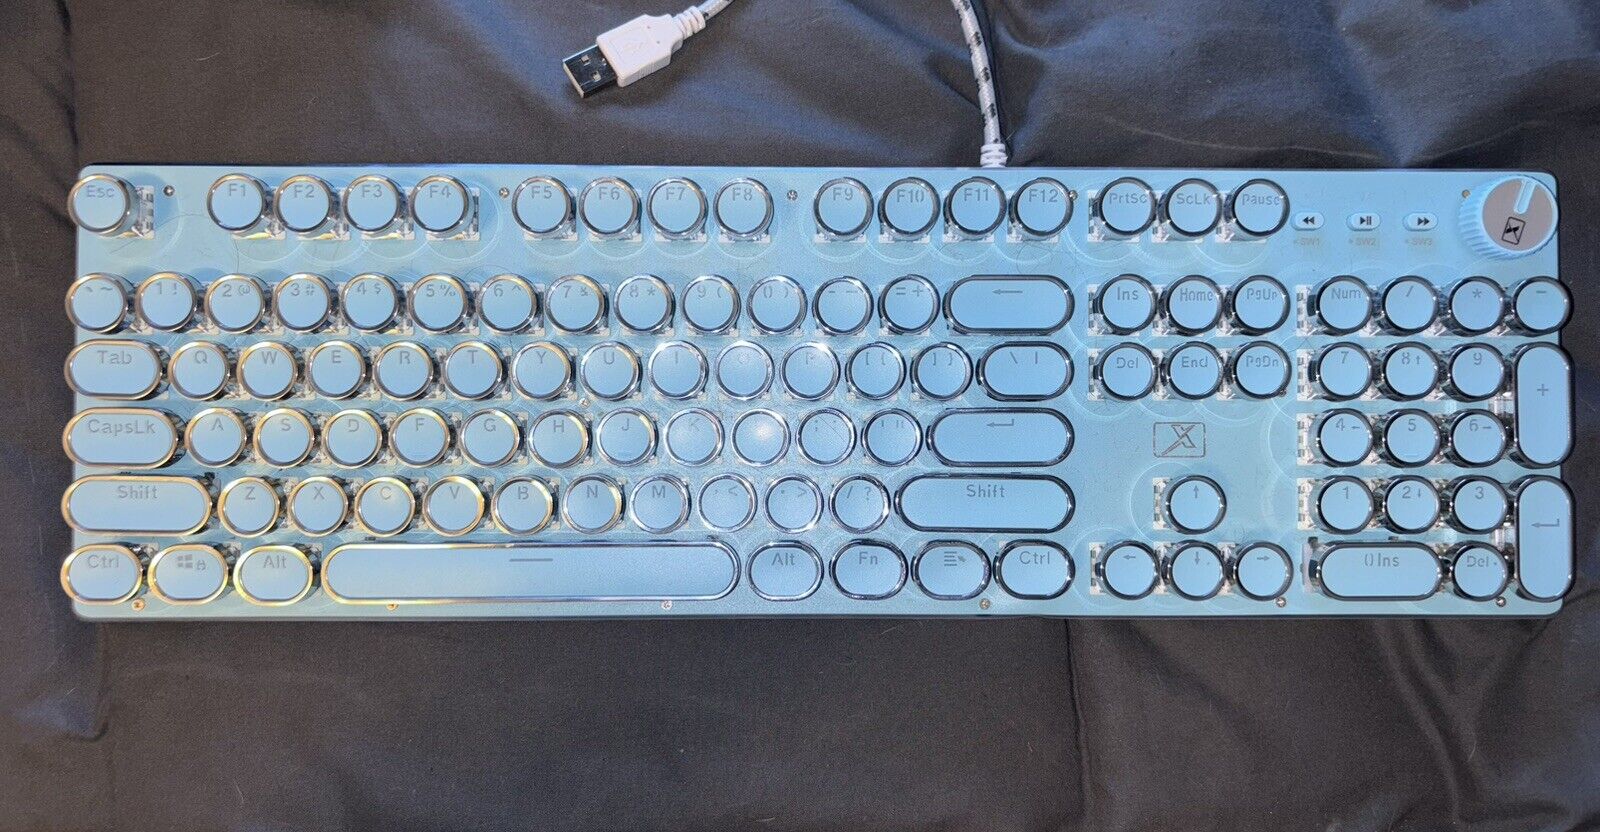 Light Up Aesthetic Retro Punk Mechanical Typewriter Keyboard RGB 104 Keys Wired